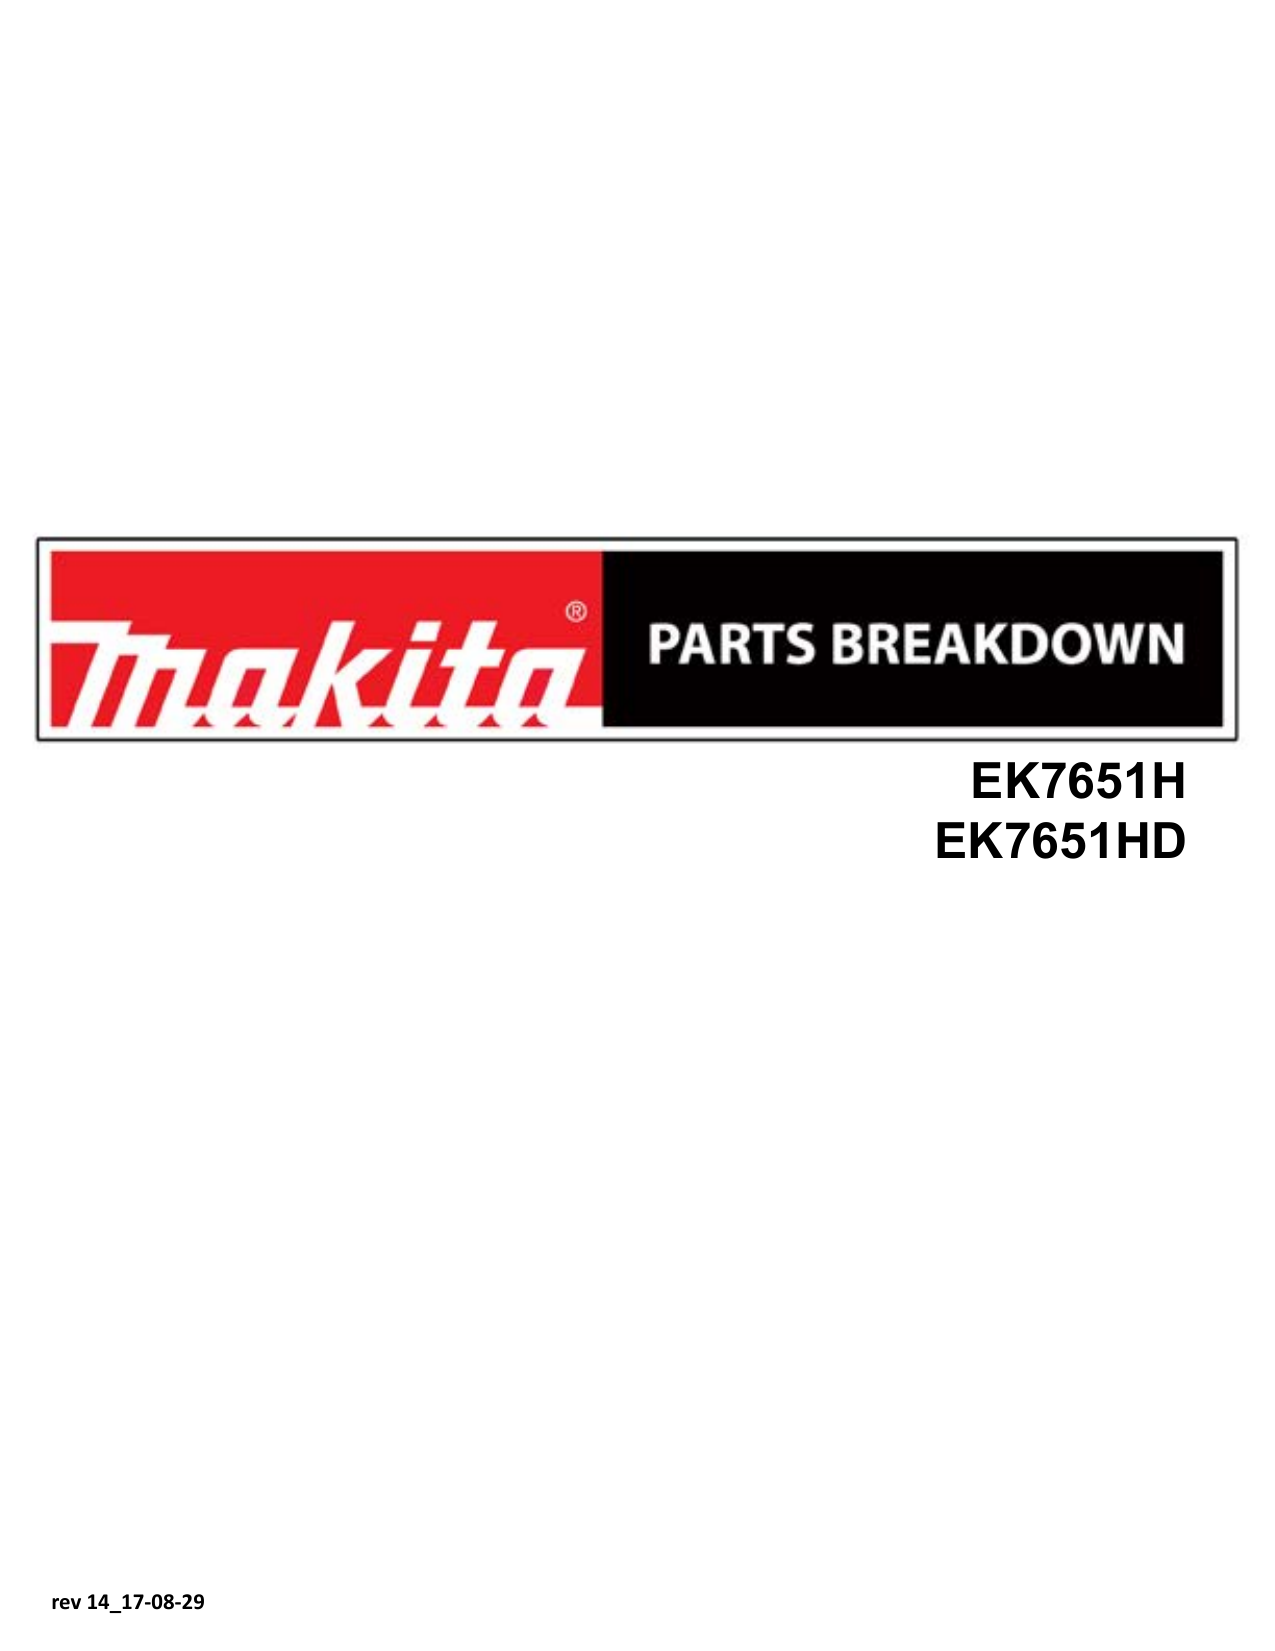 Makita 452726-4 Oil Line Replacement Part